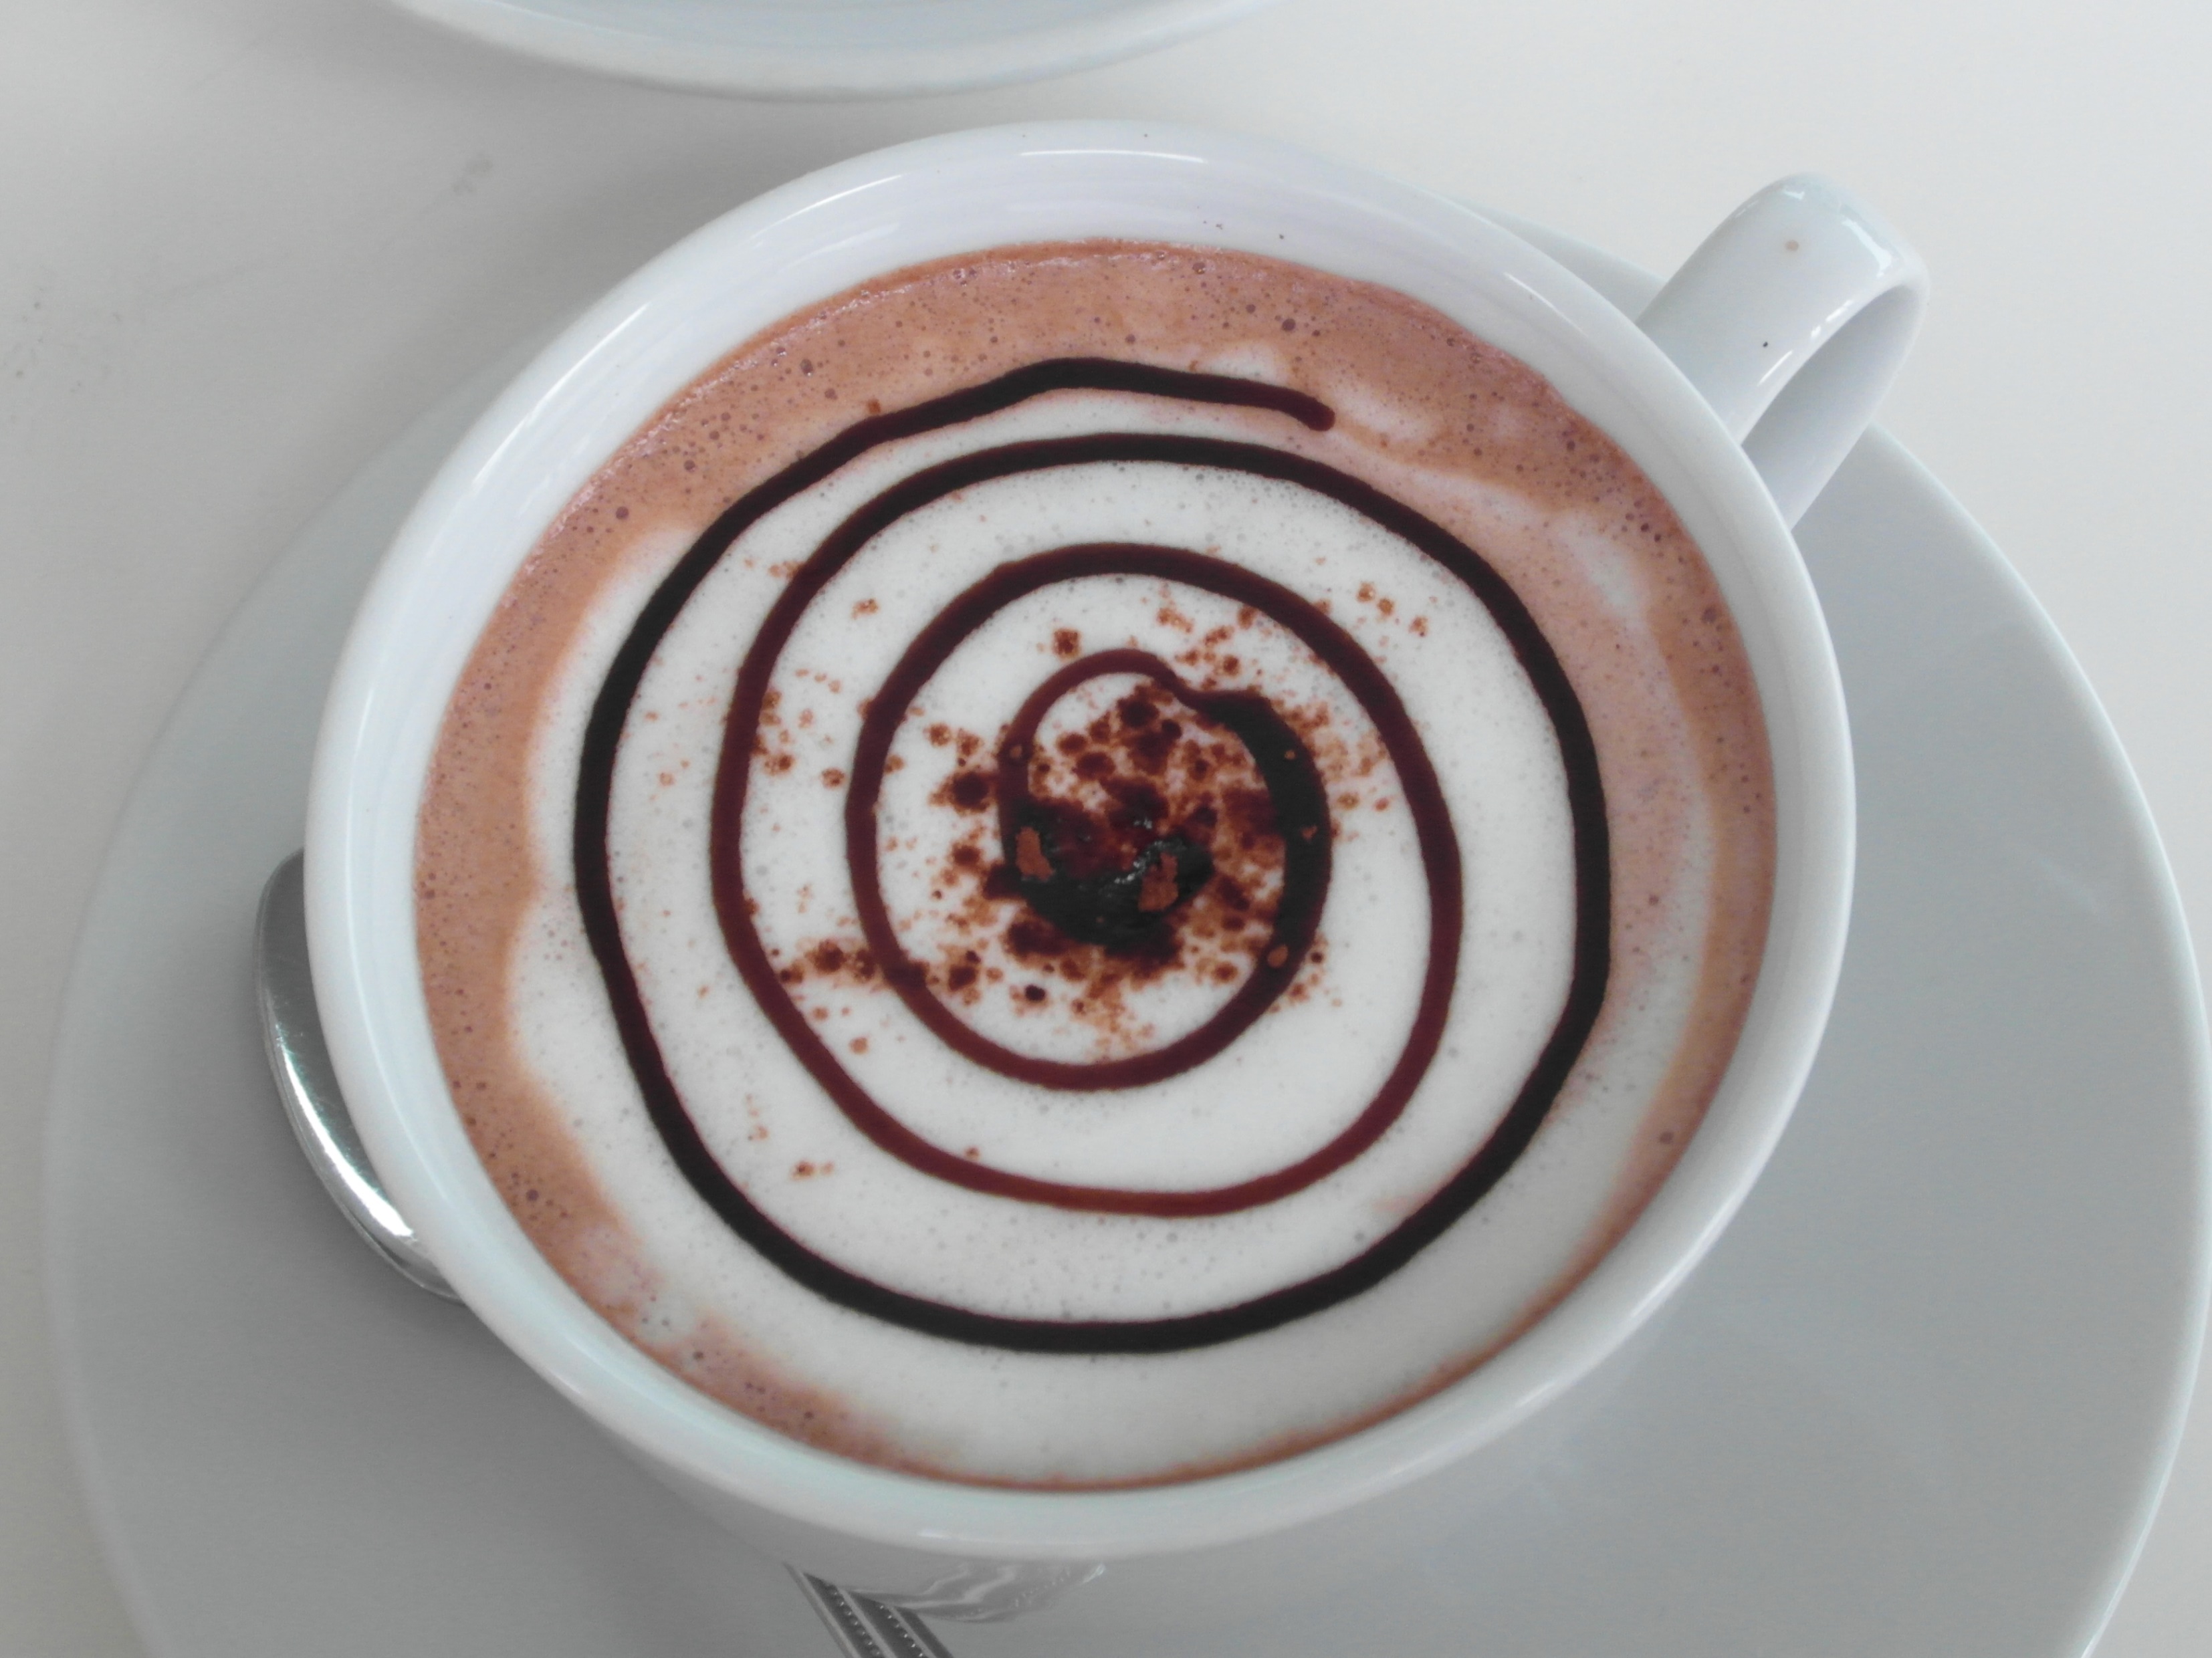 Coffee spiral art photo